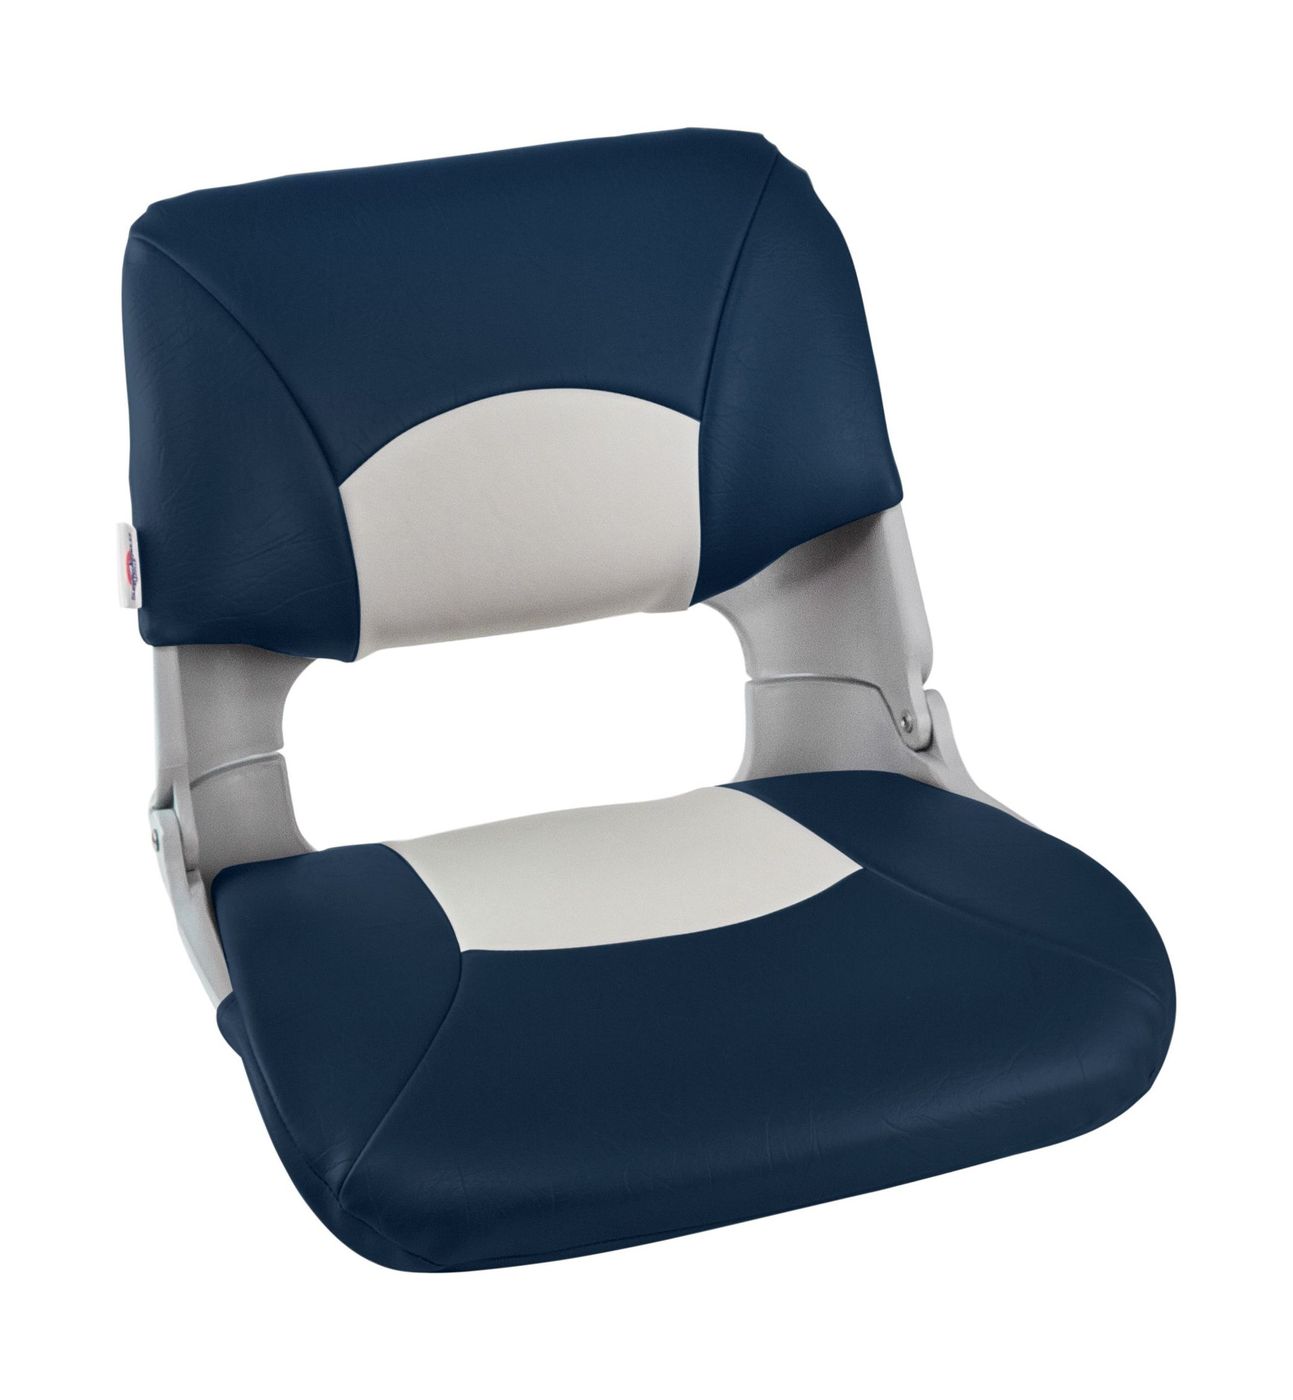 Кресло складное мягкое SKIPPER, цвет серый/синий 1061019 сиденье мягкое bass boat seat серый синий 75132gcb